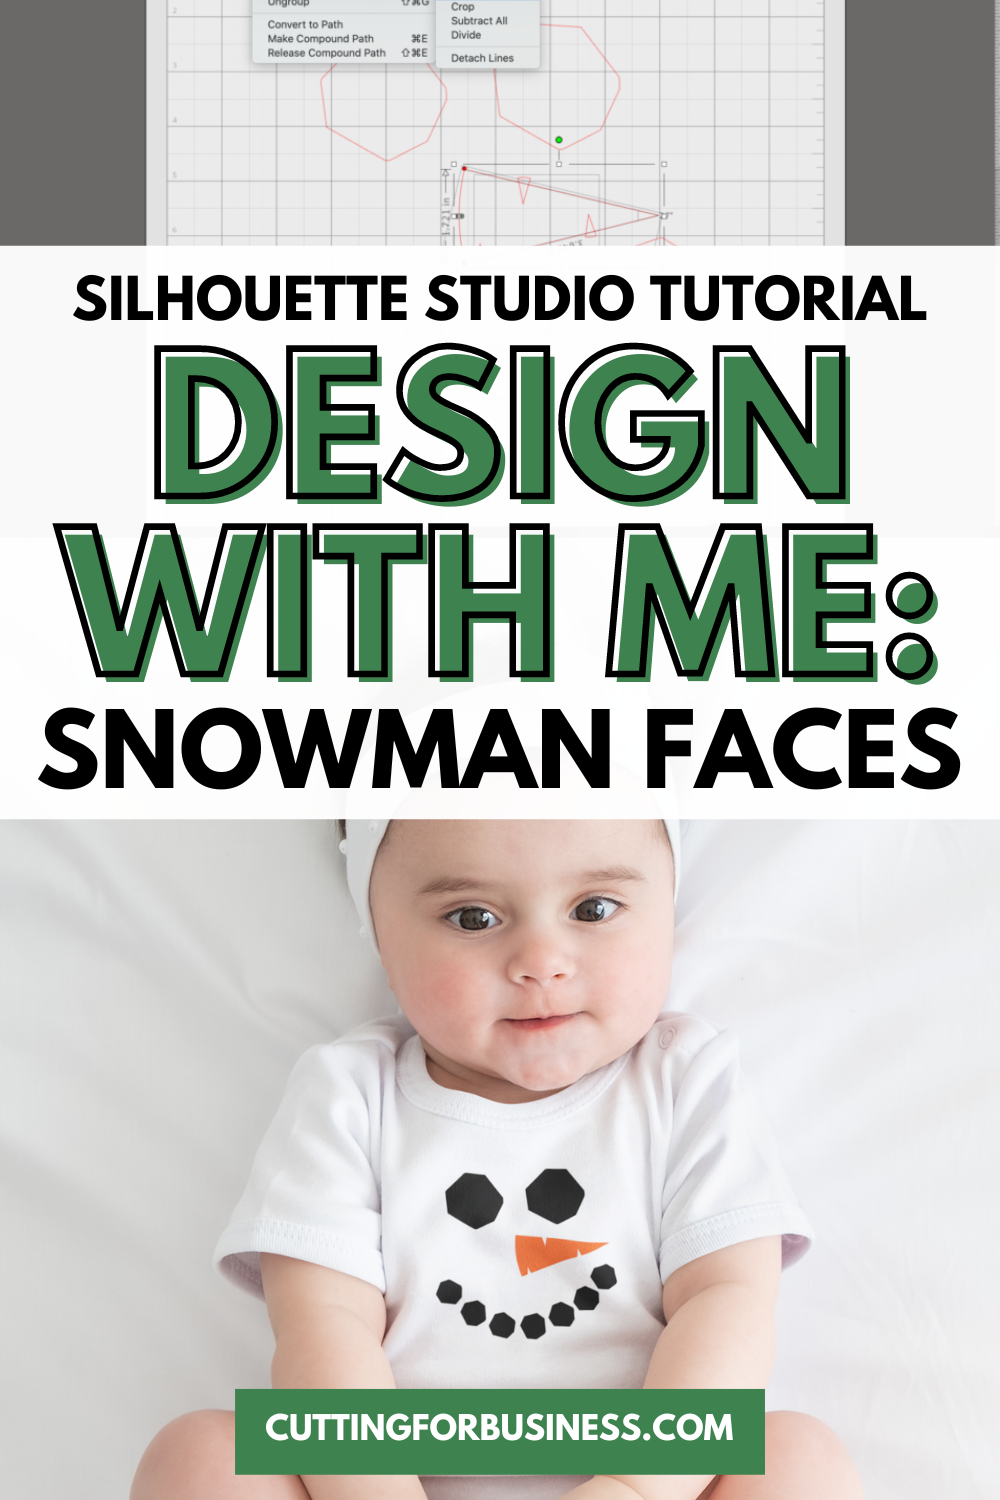 Silhouette Studio Tutorial: Snowman Faces - cuttingforbusiness.com.